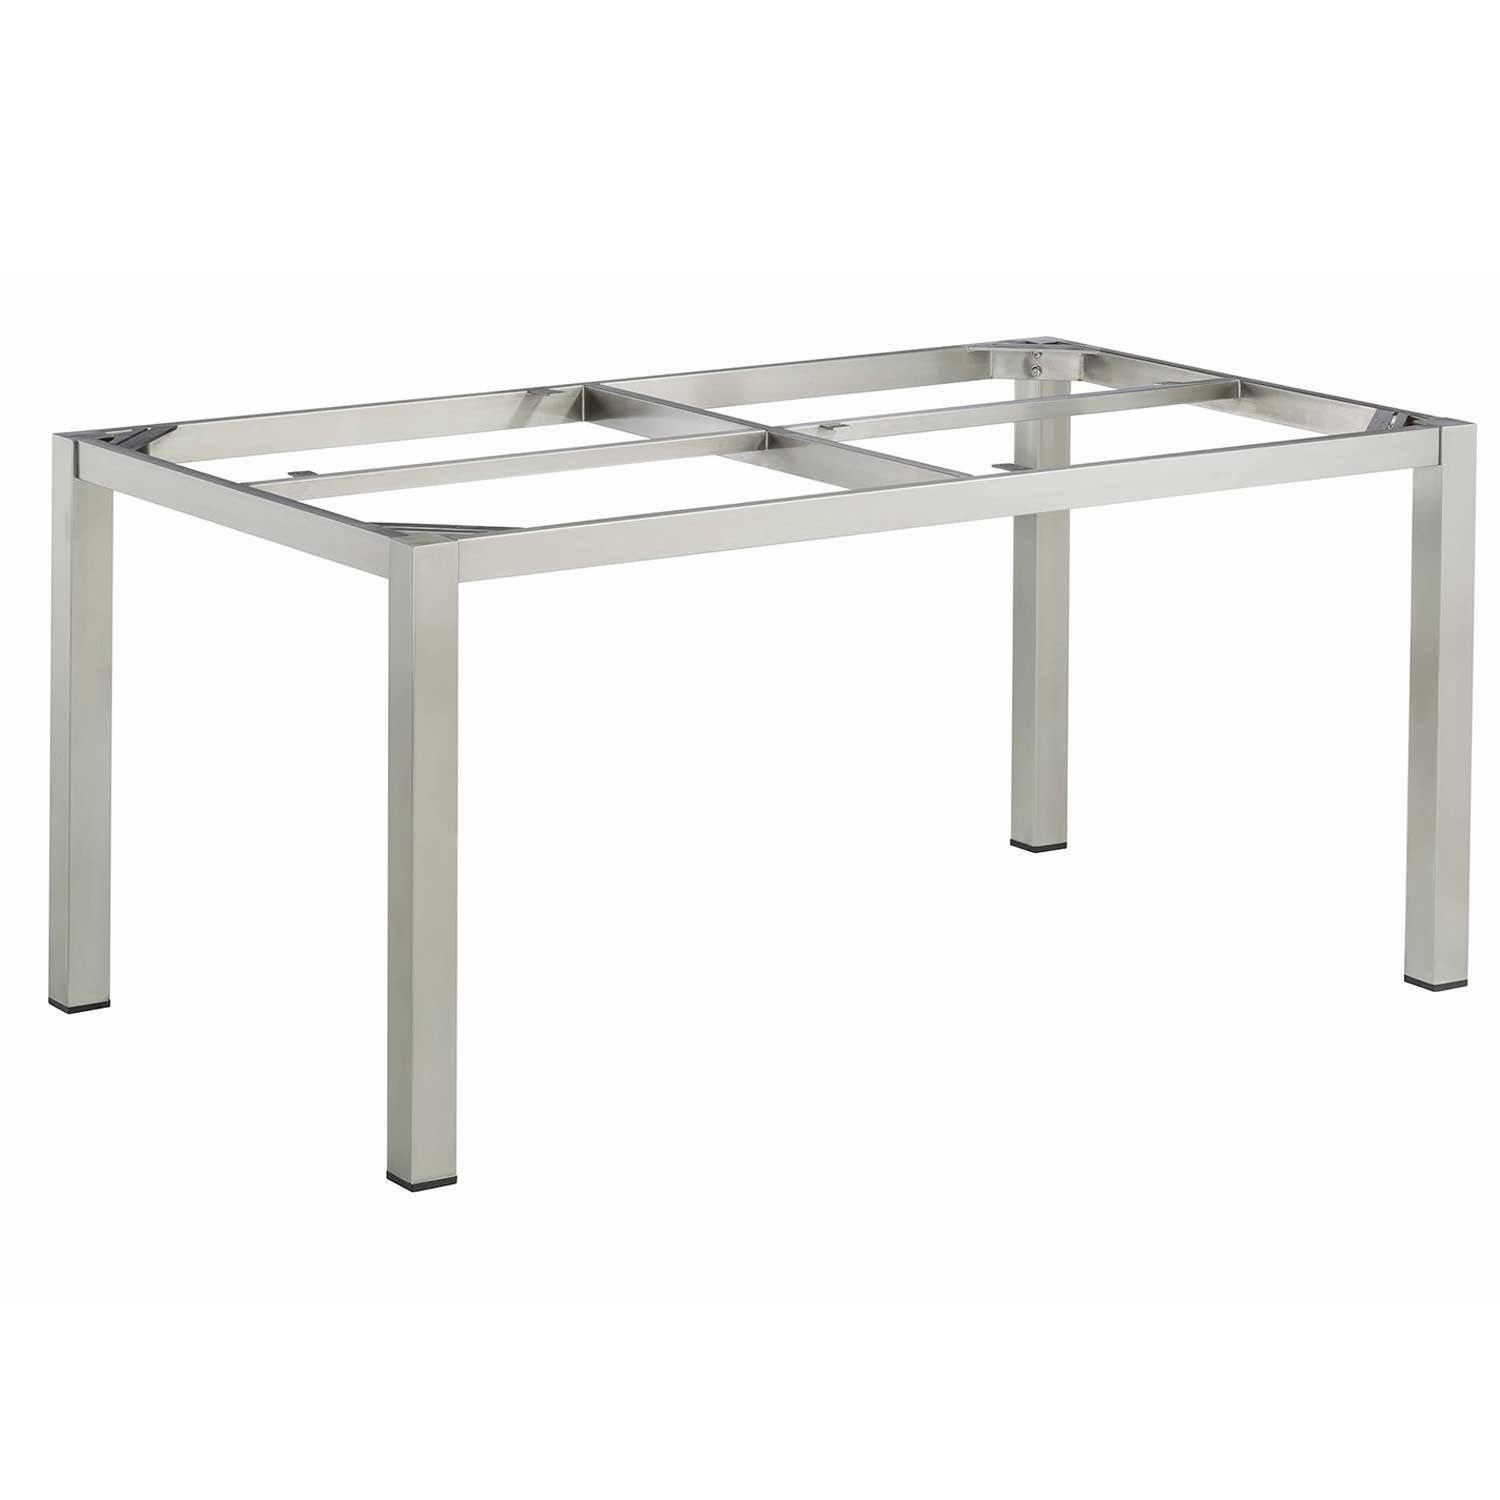 Tischgestell KETTLER 160x95cm Edelstahl Gartentisch Gartentisch Cubic Kettler